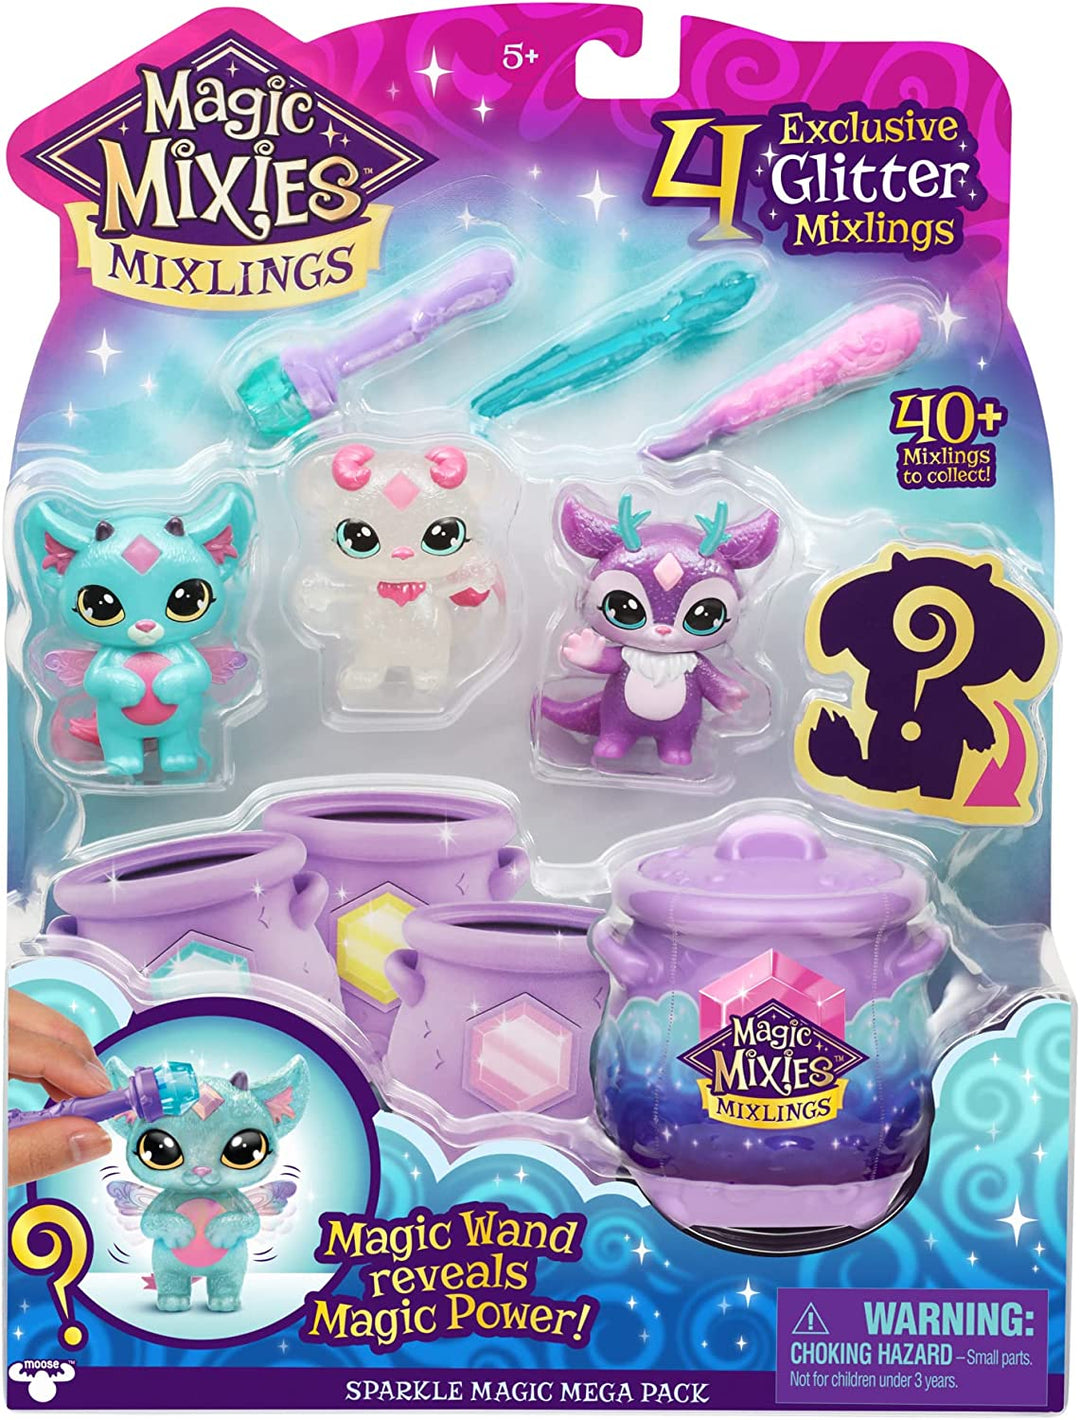 Magic Mixies Mixlings Sparkle Magic Mega Pack - Series 1